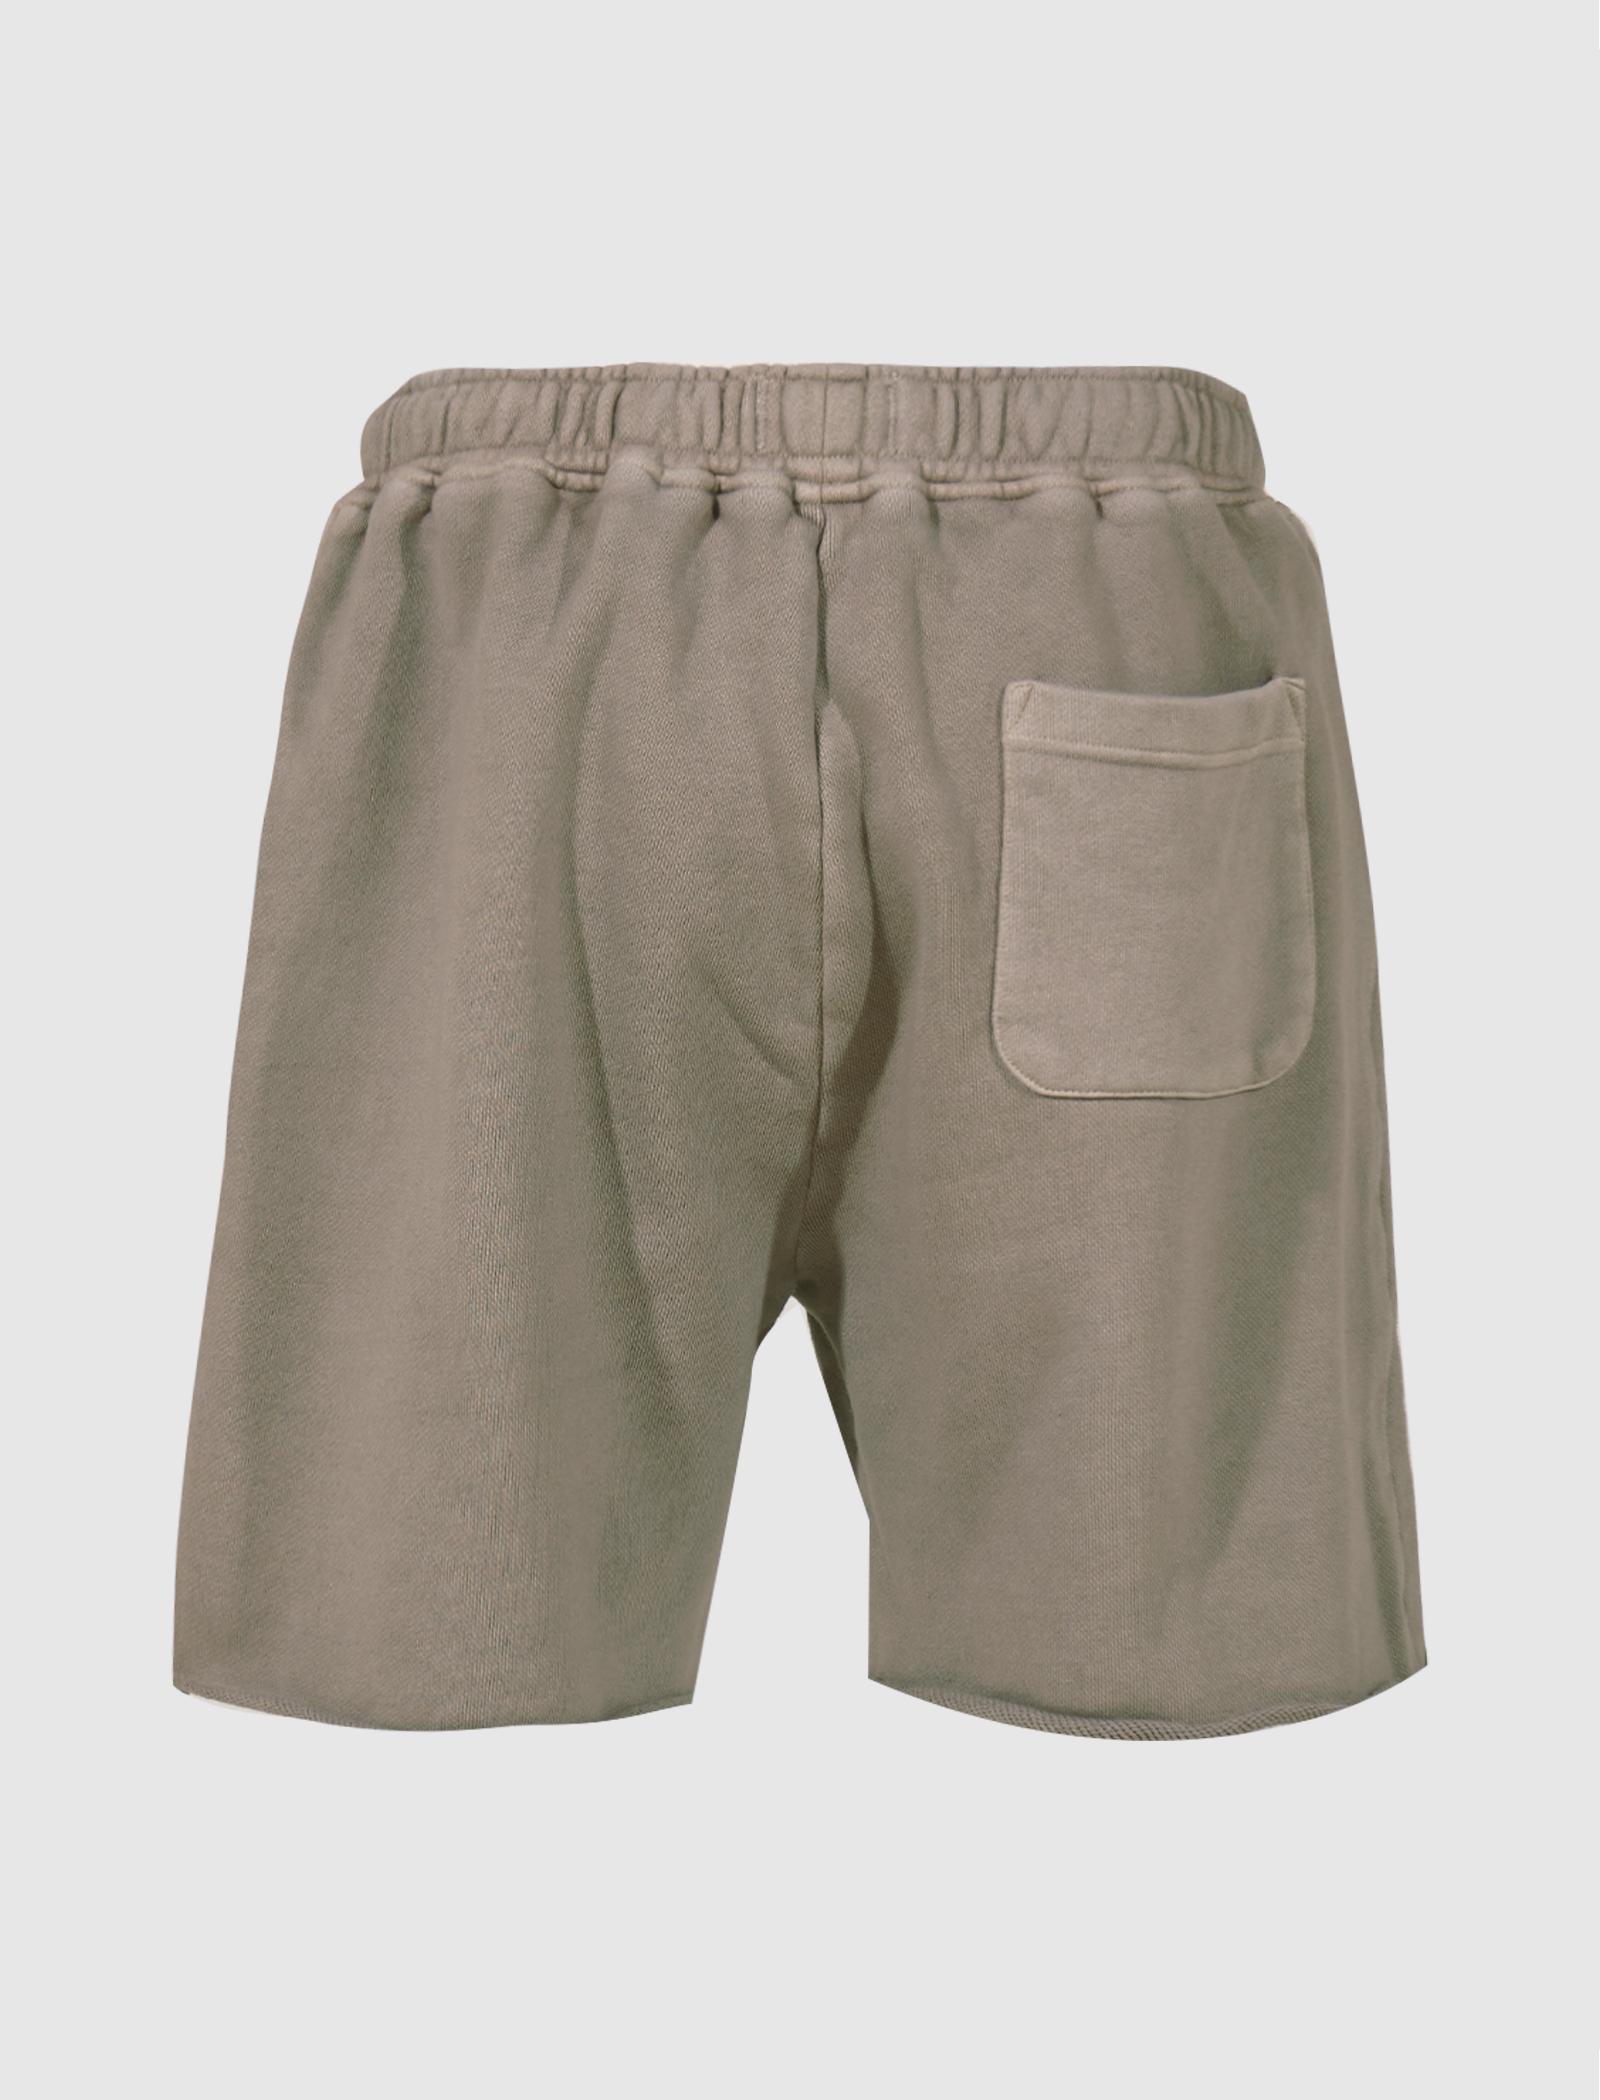 Mens Clothing Shorts Casual shorts Honor The Gift Fleece Studio Shorts for Men 